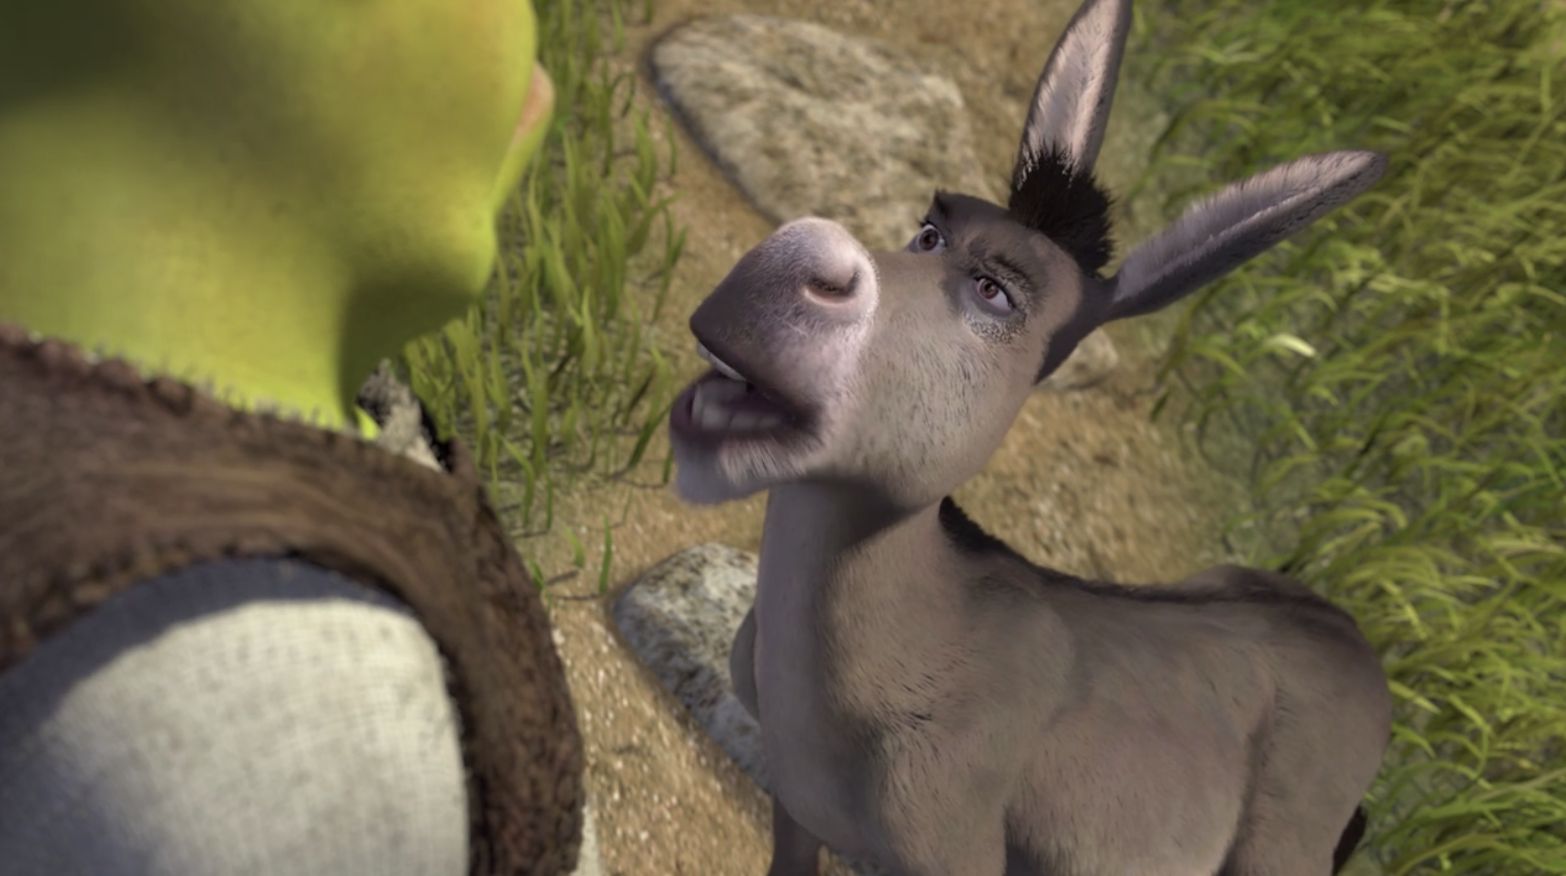 Donkey yelling in Shrek's face. 